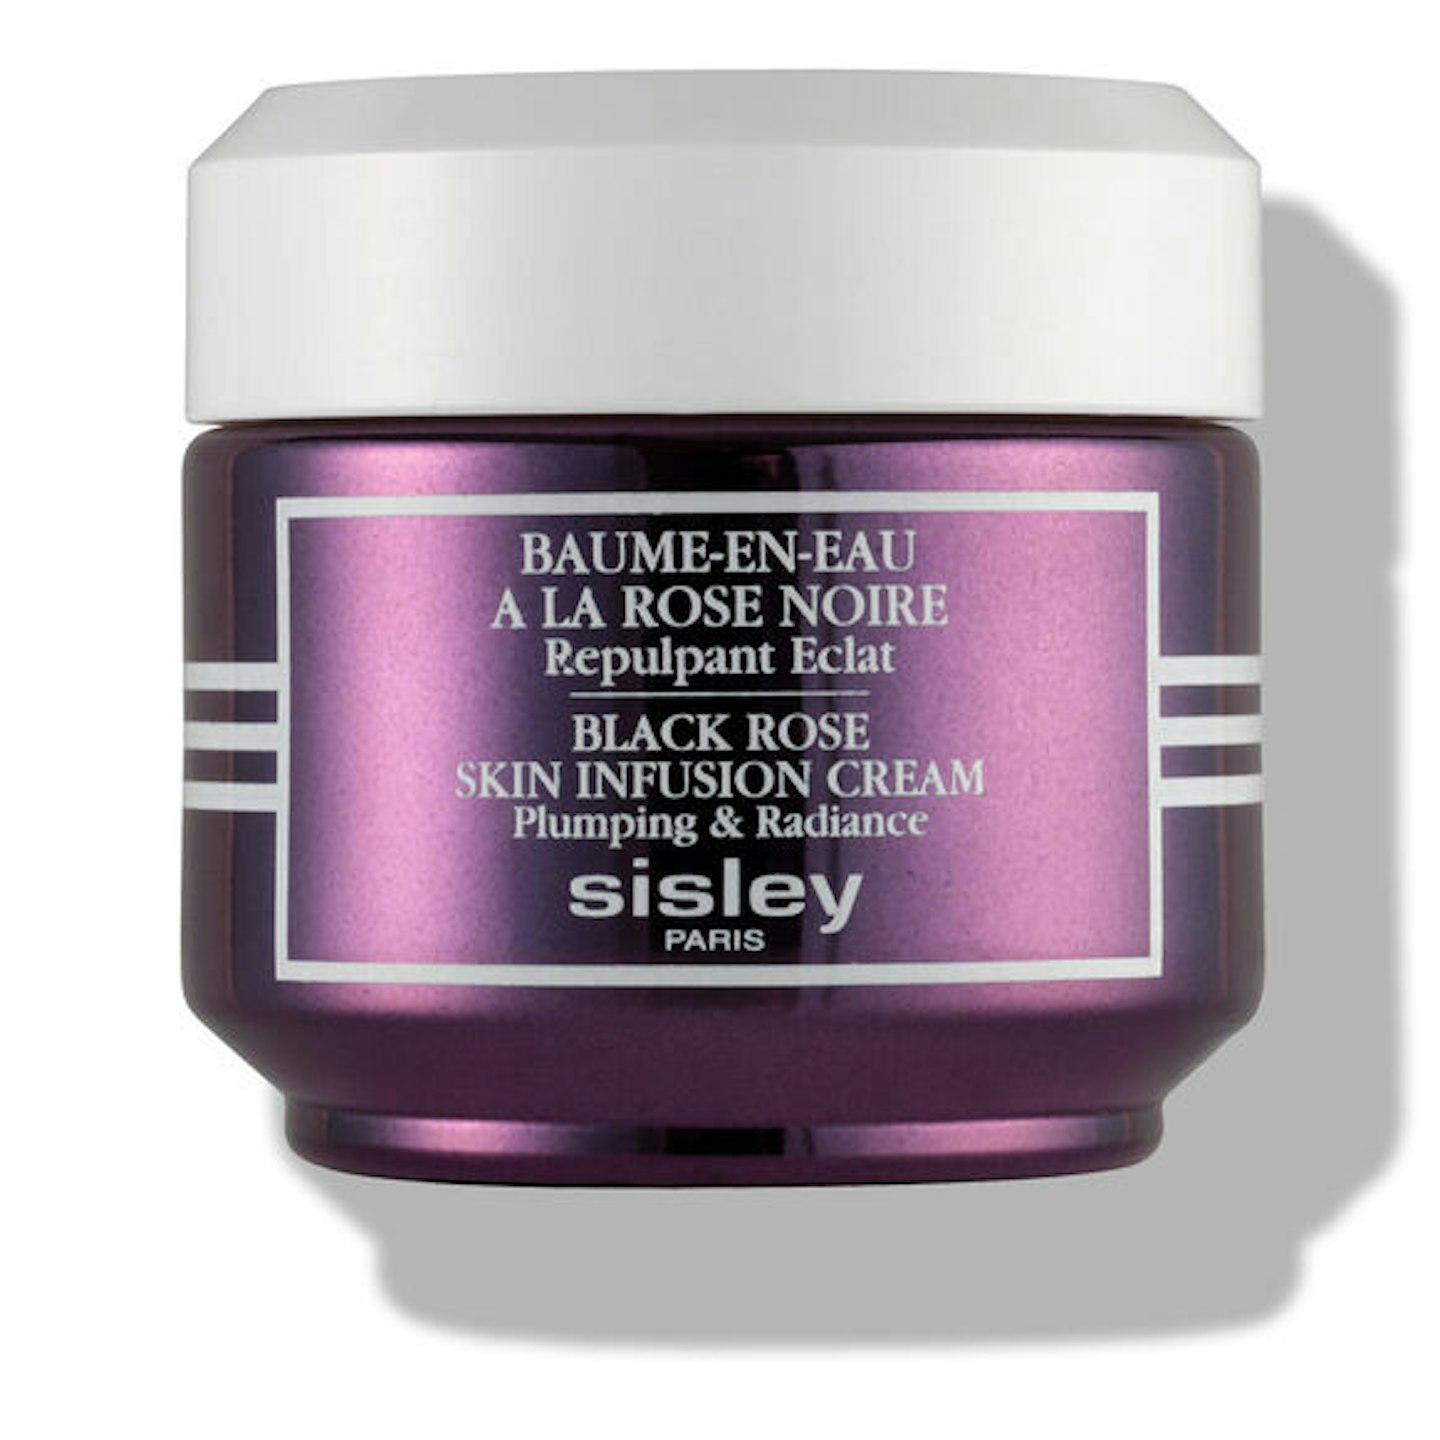 Sisley Black Rose Skin Infusion Cream moisturiser